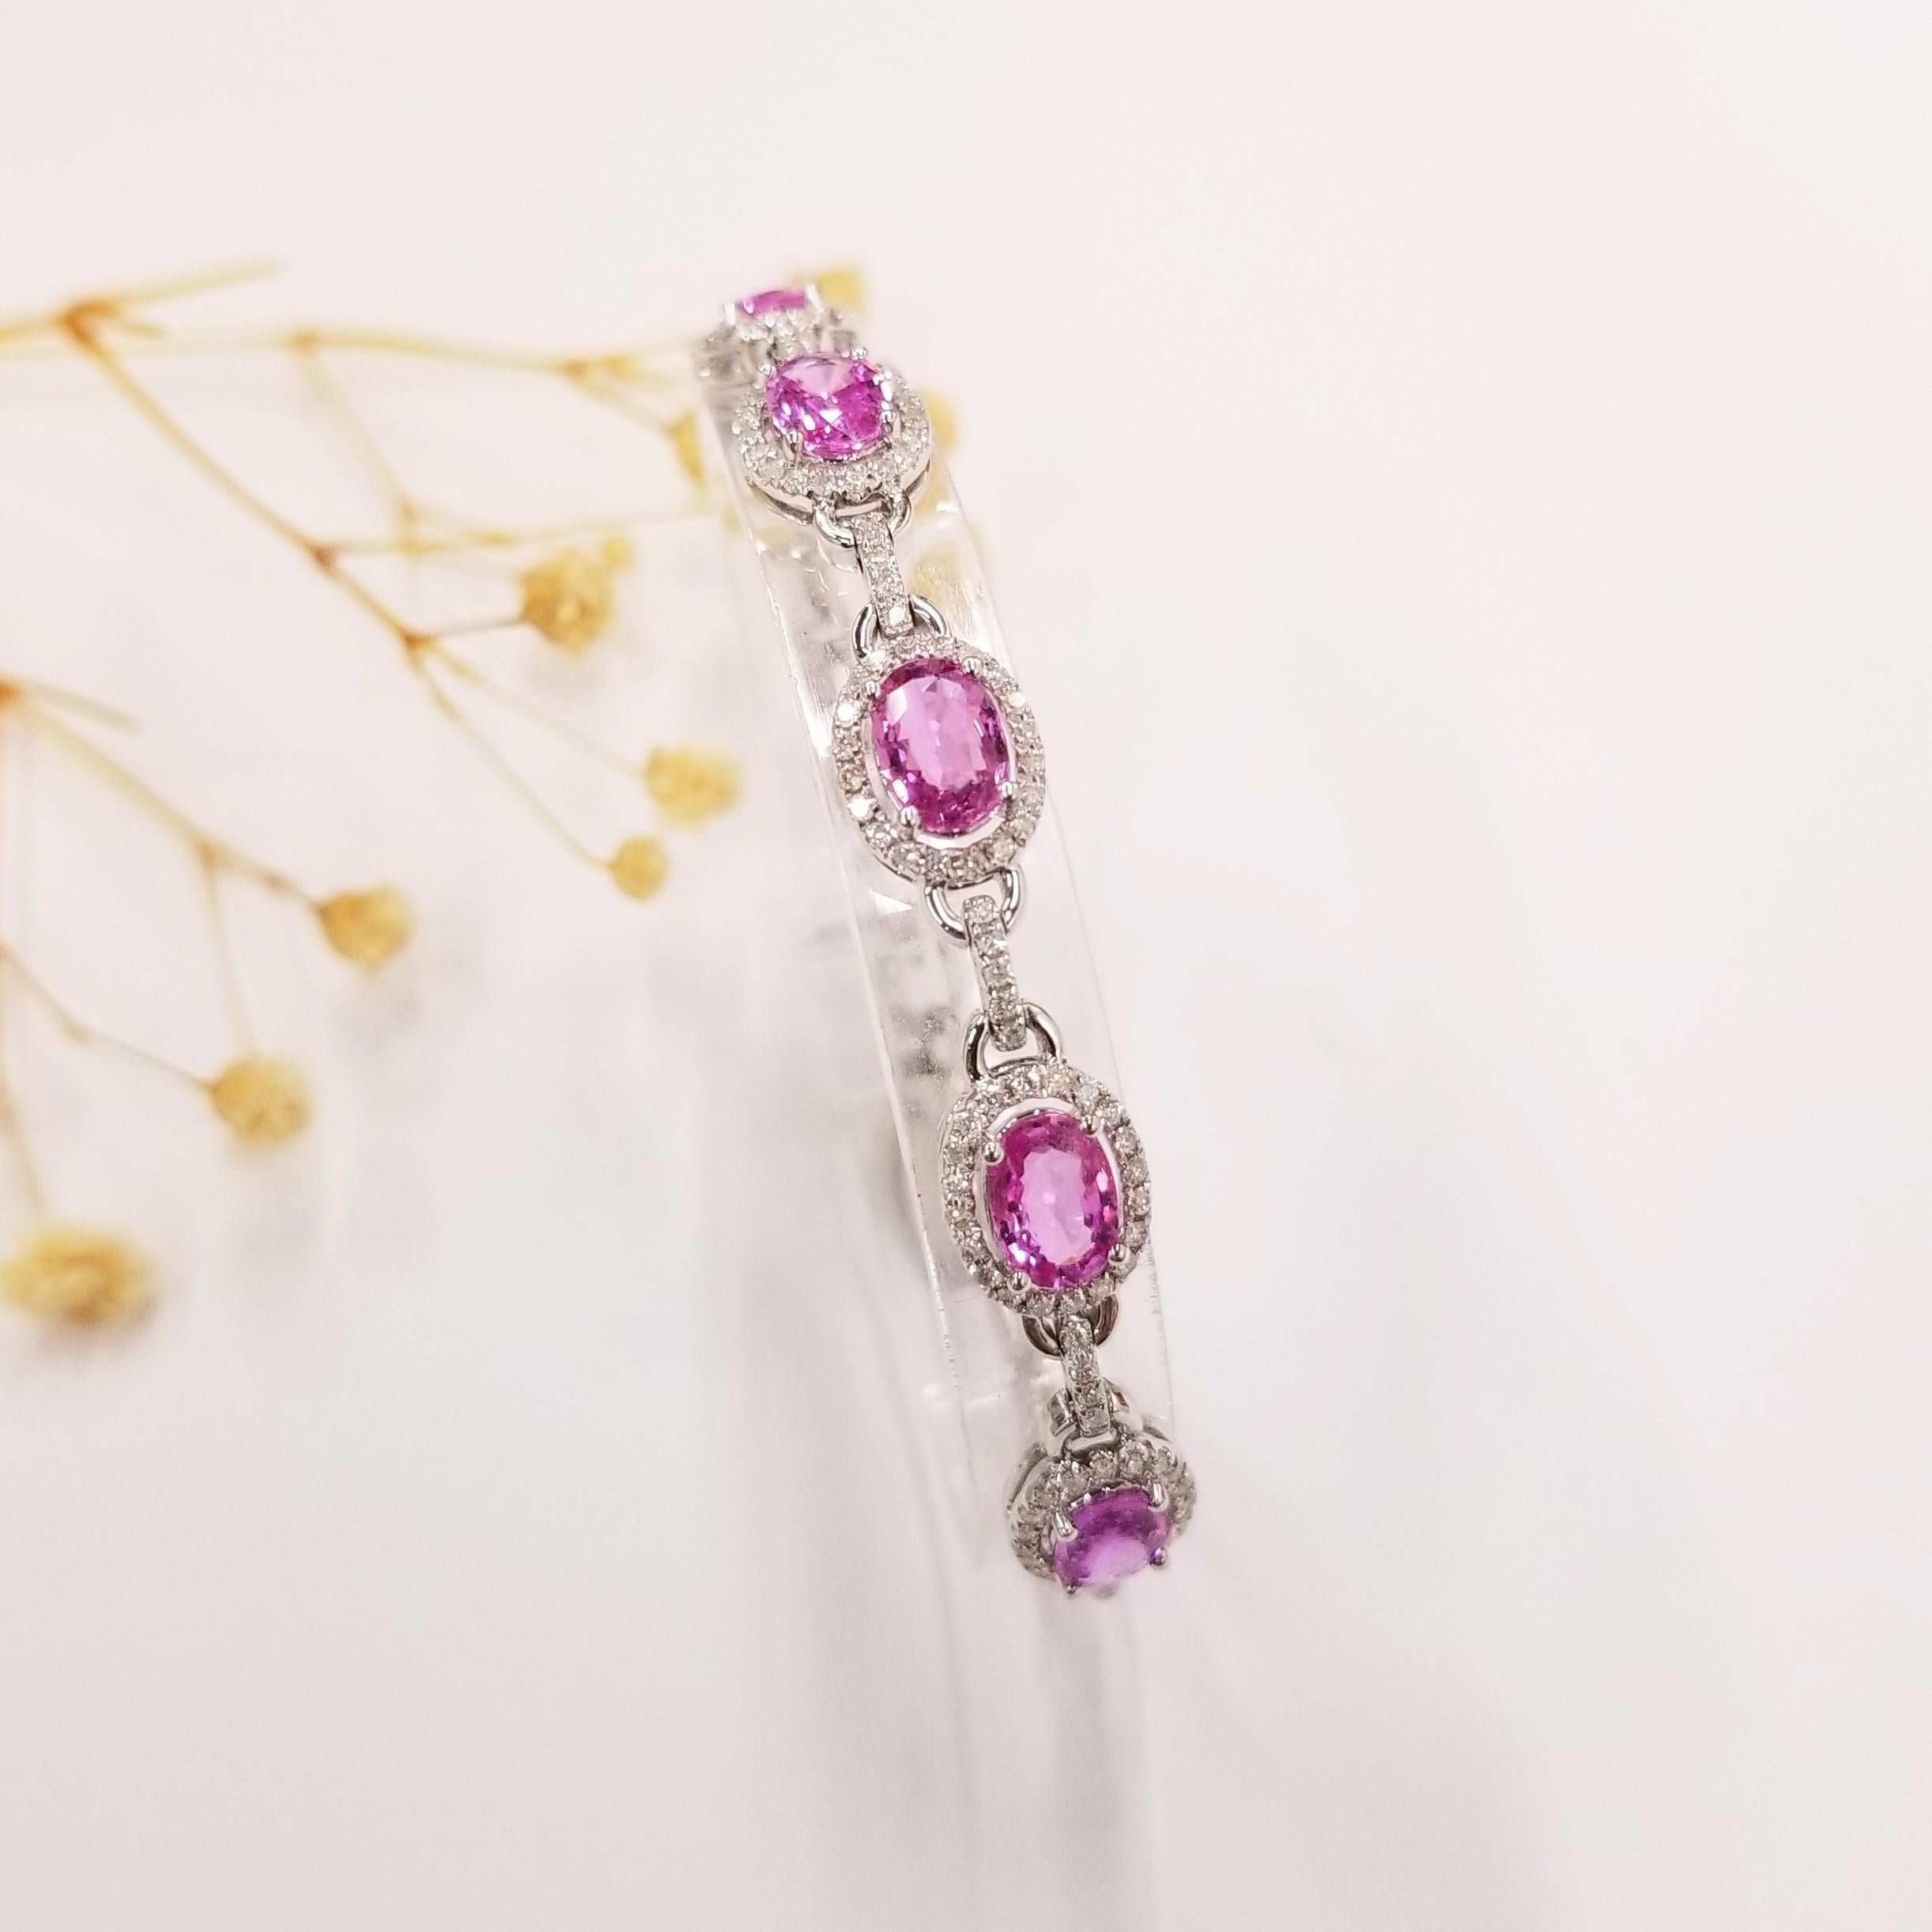 Oval Cut IGI Certified 4.24 Carat Pink Sapphire & Diamond Bracelet in 18K White Gold For Sale